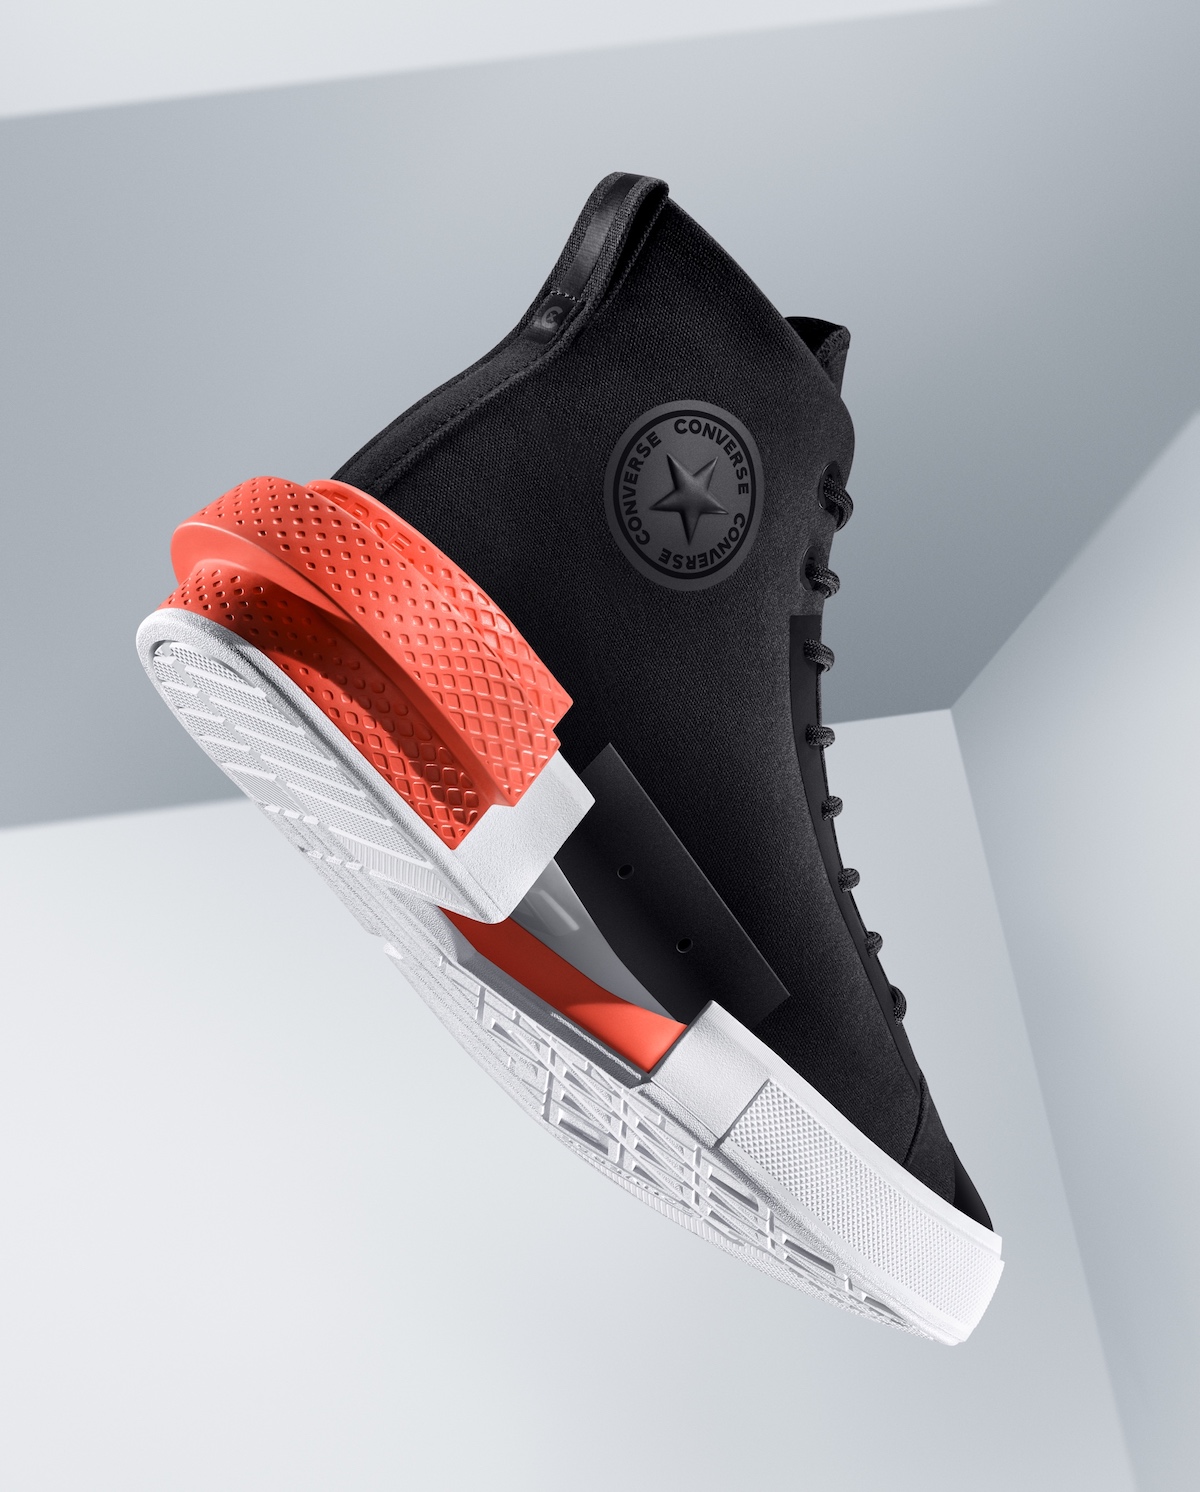 Converse Introduce new CX Footwear Line